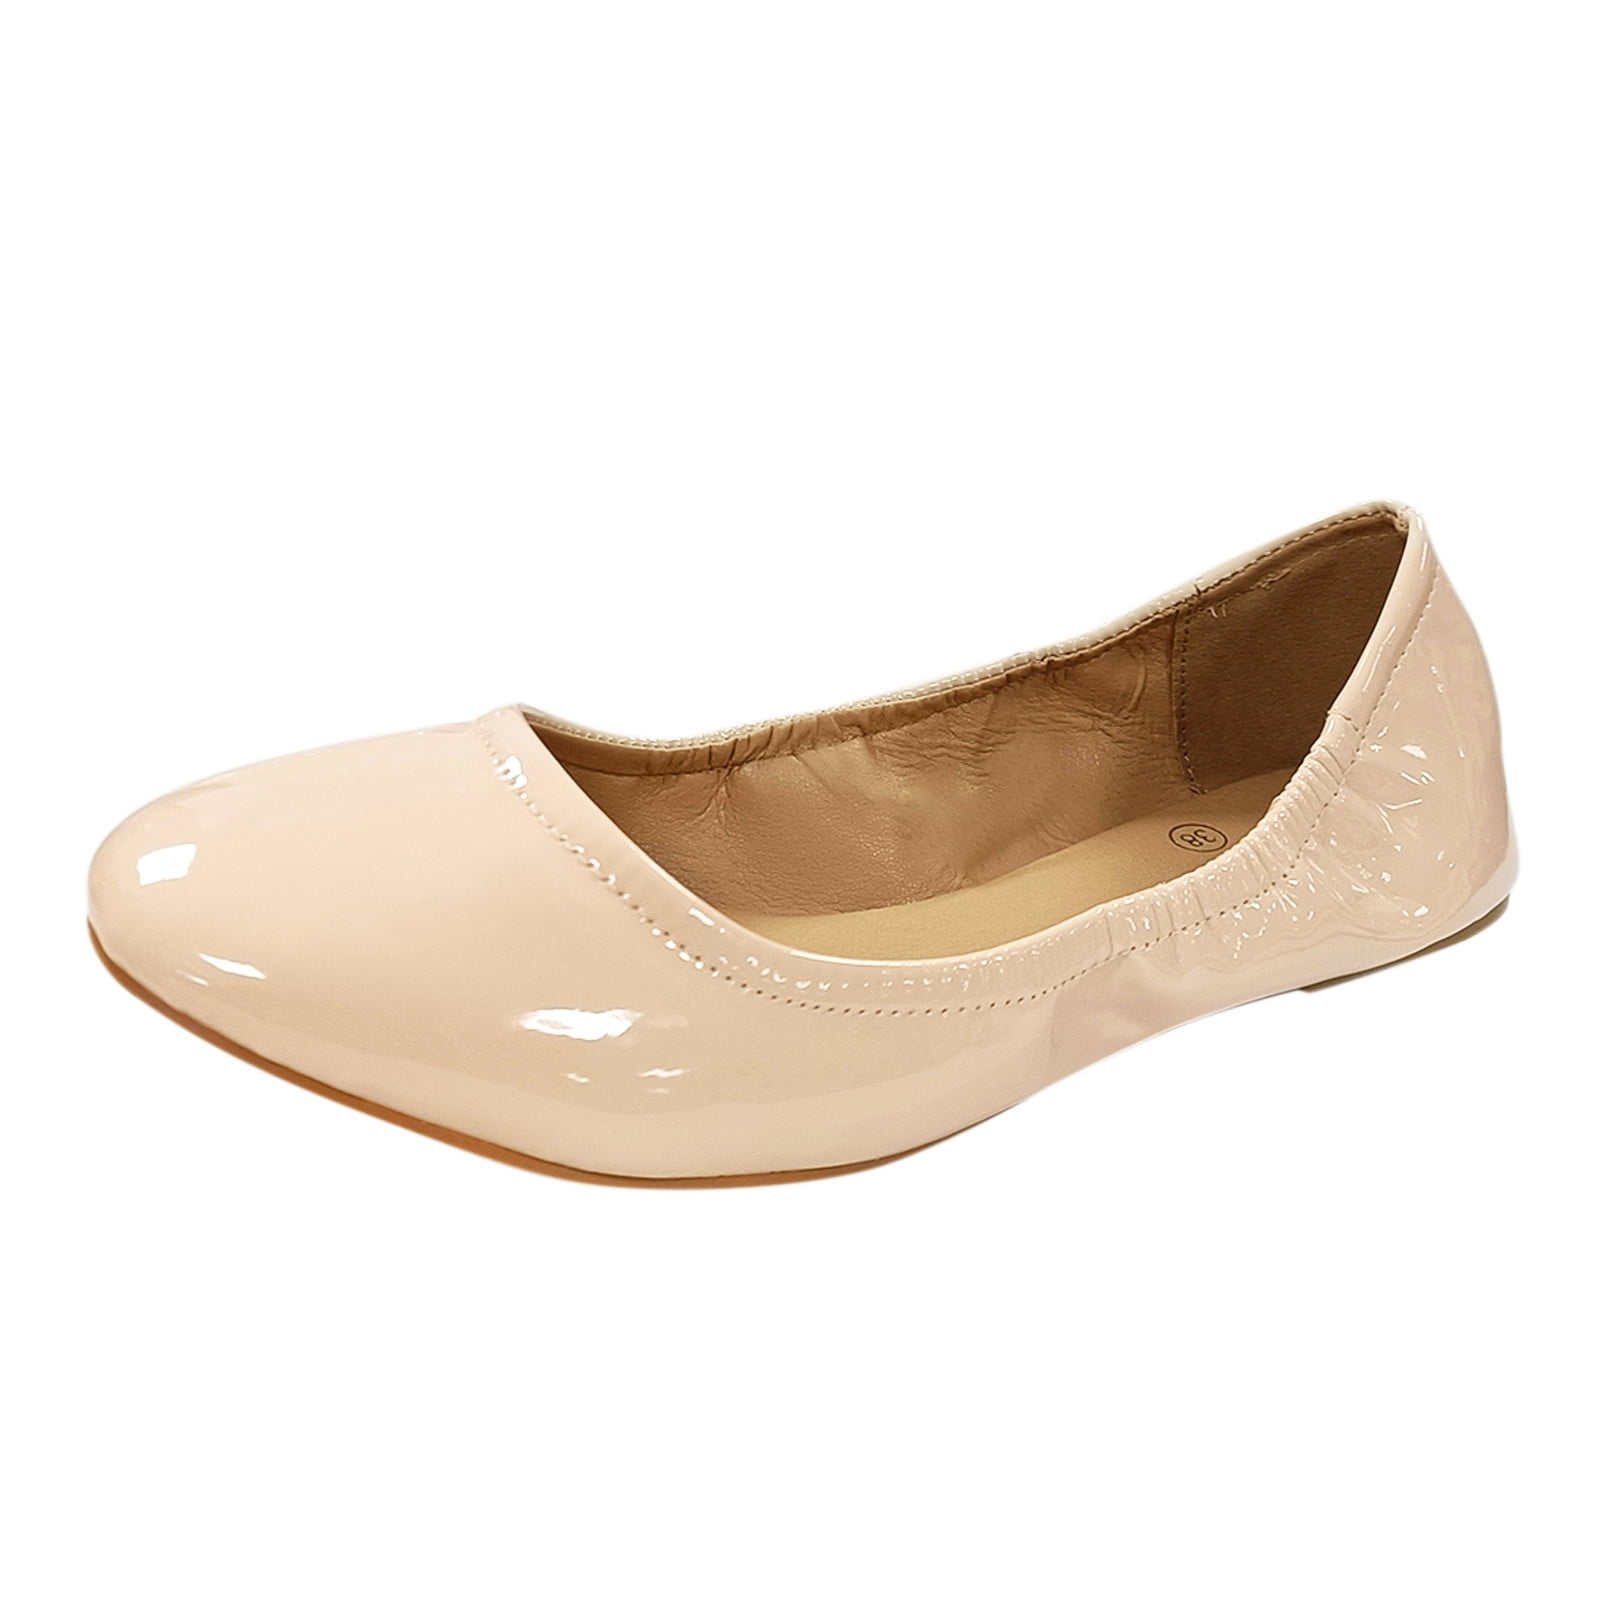 TOWED22 Flat Shoes For Women, Women's Flats Comfort on Ballerina Square Toe Ballet Shoes,Beige - Walmart.com